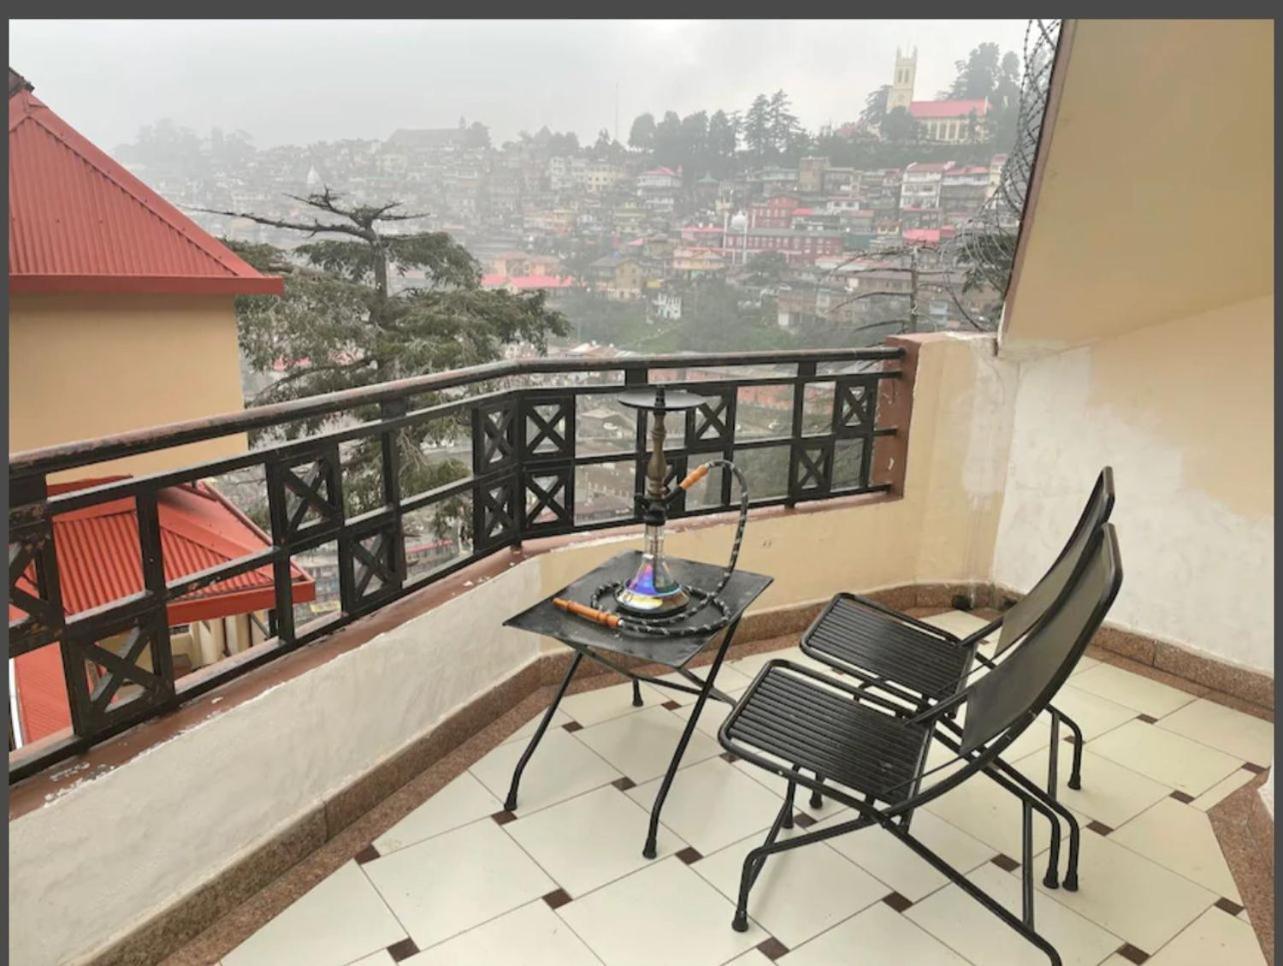 Hotel Willow Banks Shimla Exterior photo